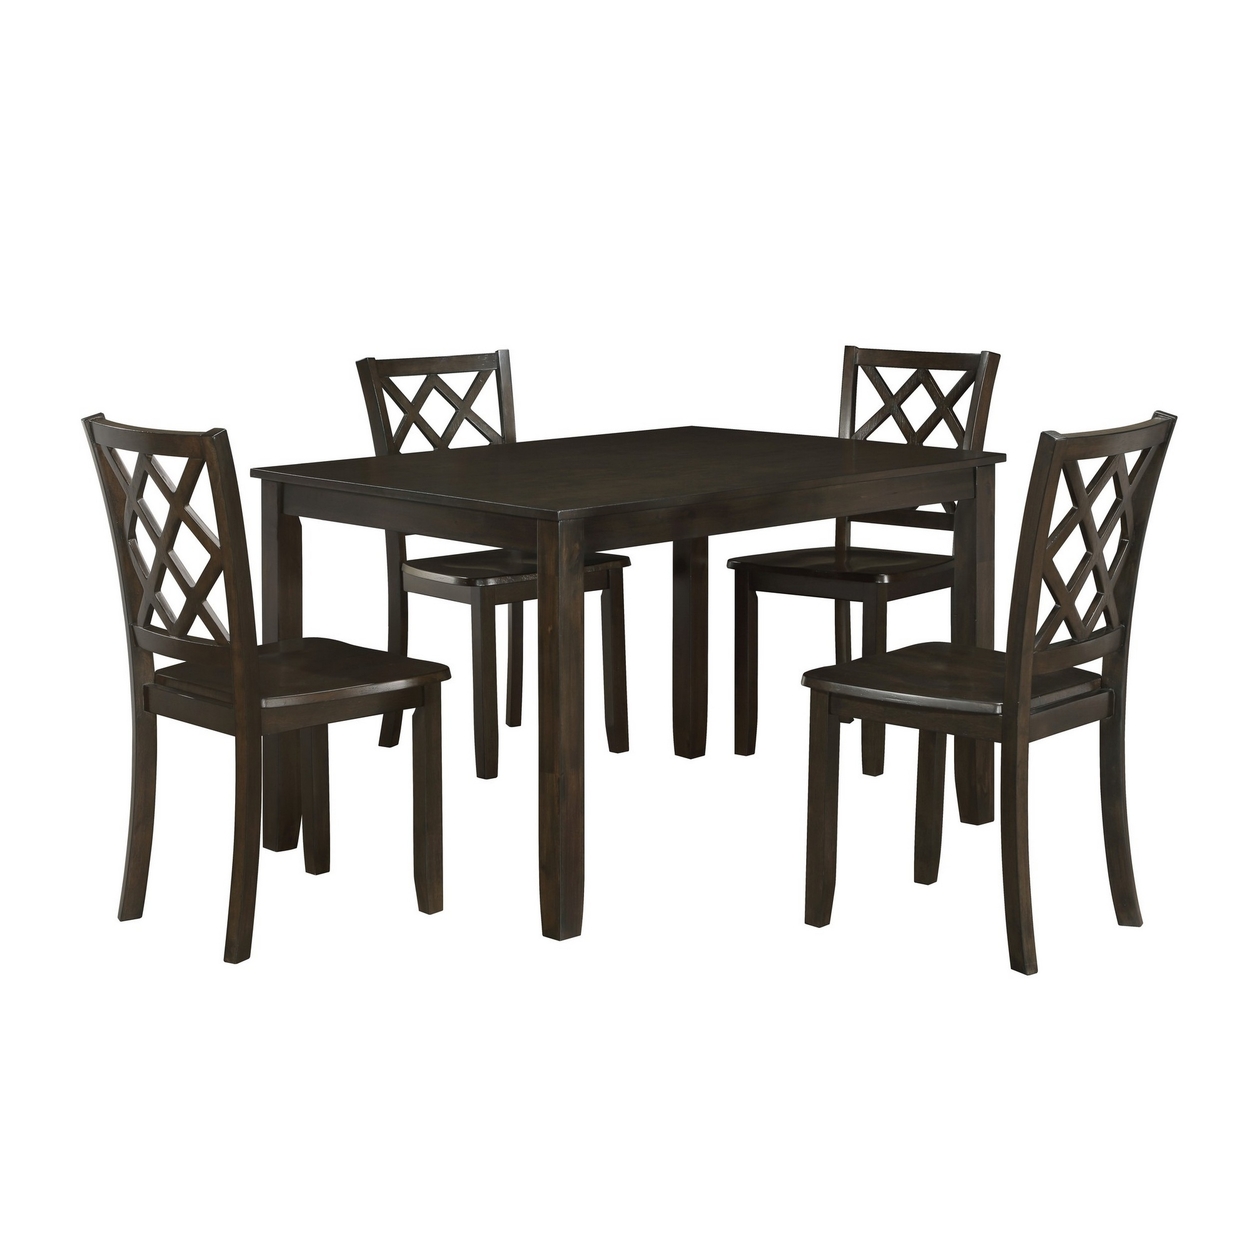 Ava 5pc Dining Table Set, 4 Lattice Back Chairs, Brown Rubberwood Frame -Saltoro Sherpi